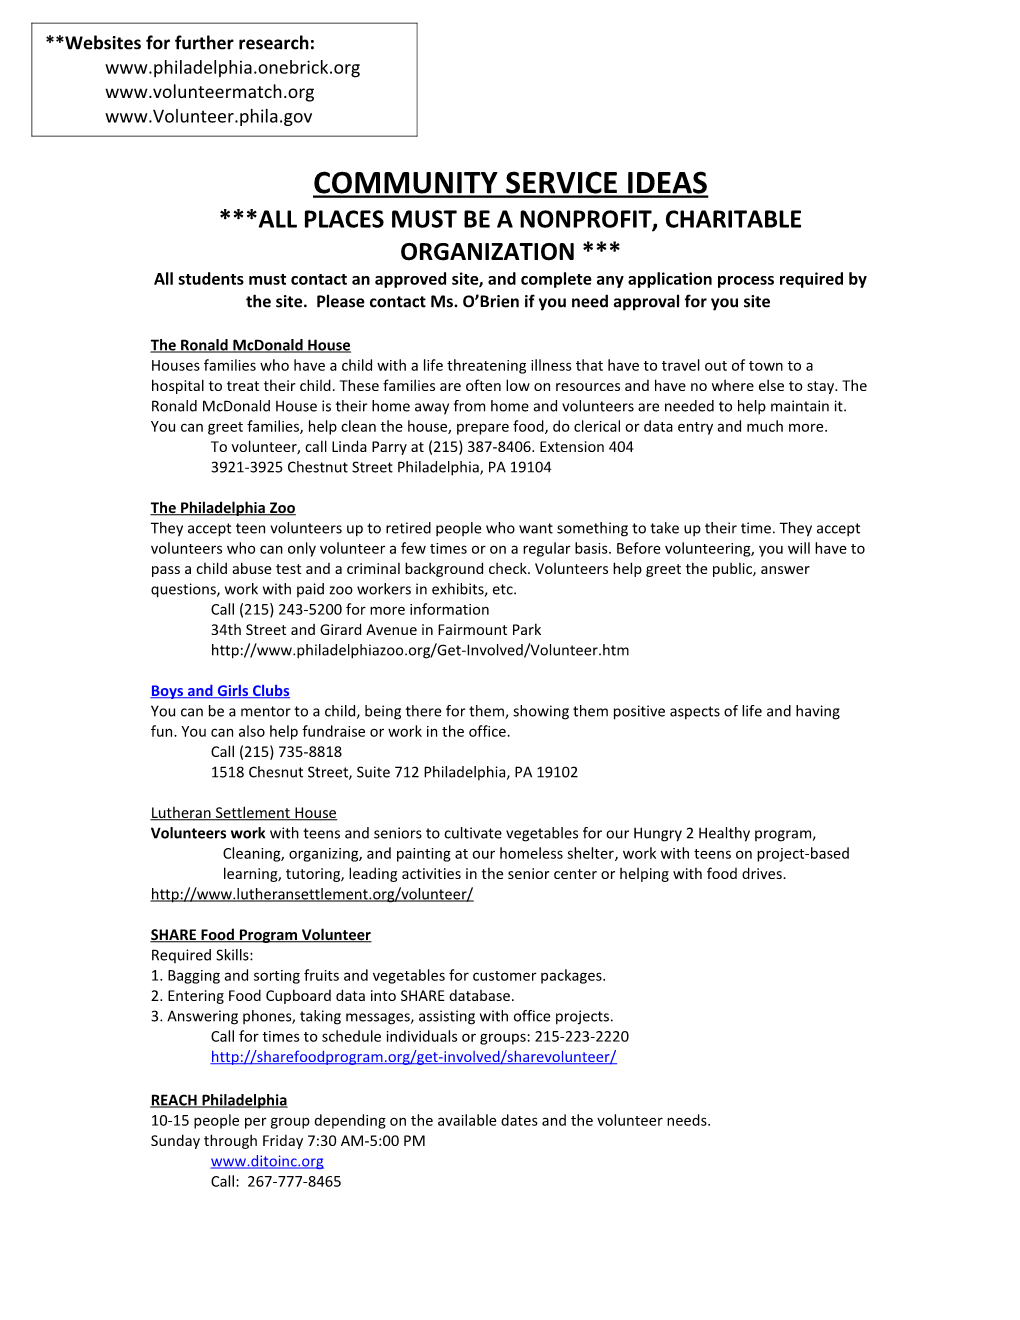 Community Service Ideas s2